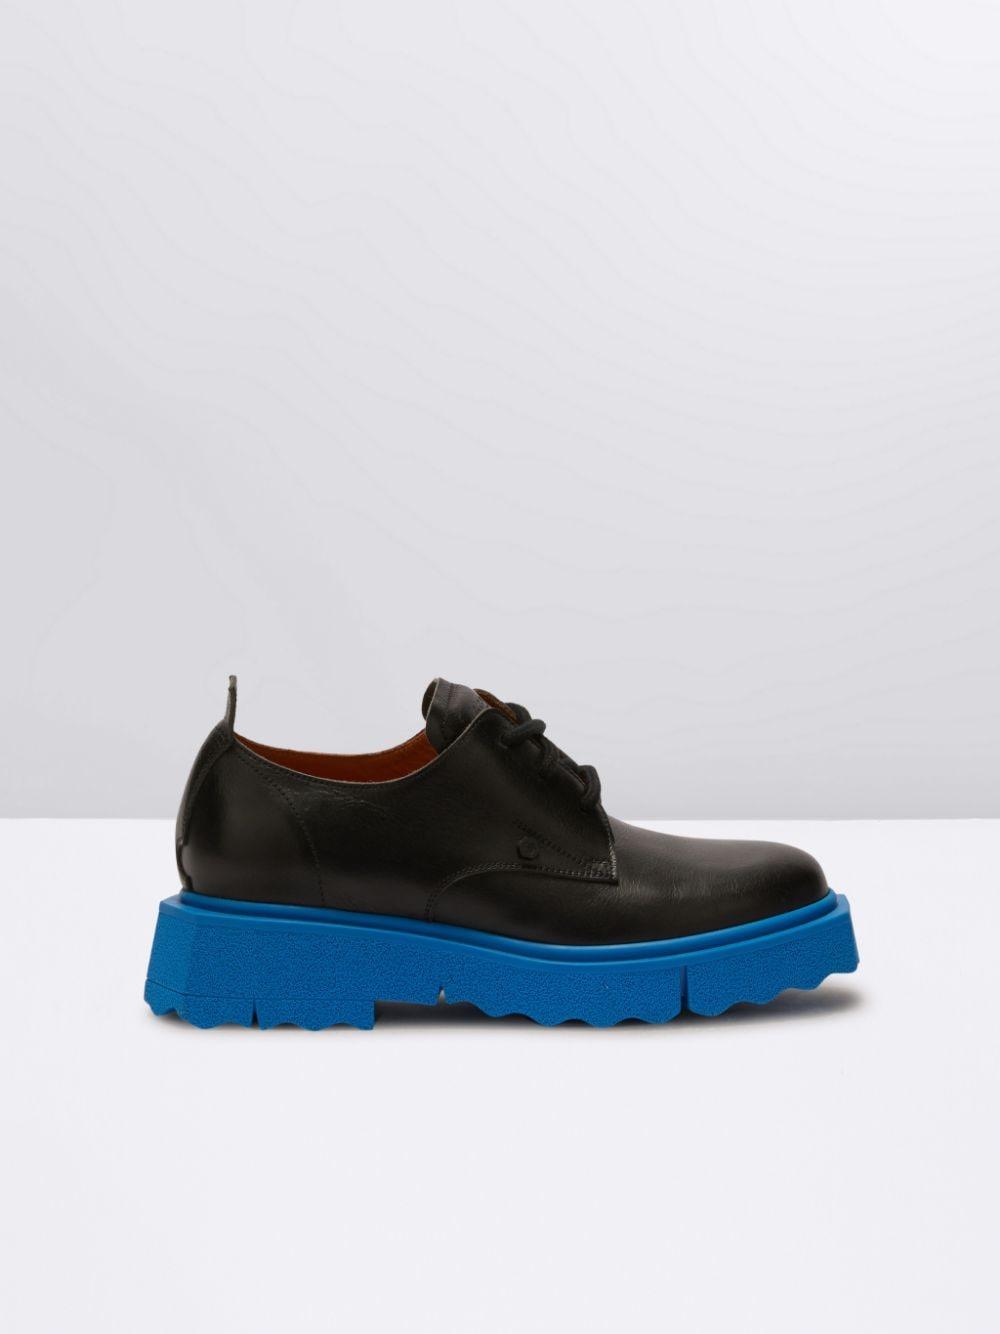 Off-White c/o Virgil Abloh Leather Derby Sponge Shoe for Men Mens Shoes Boots Formal and smart boots 